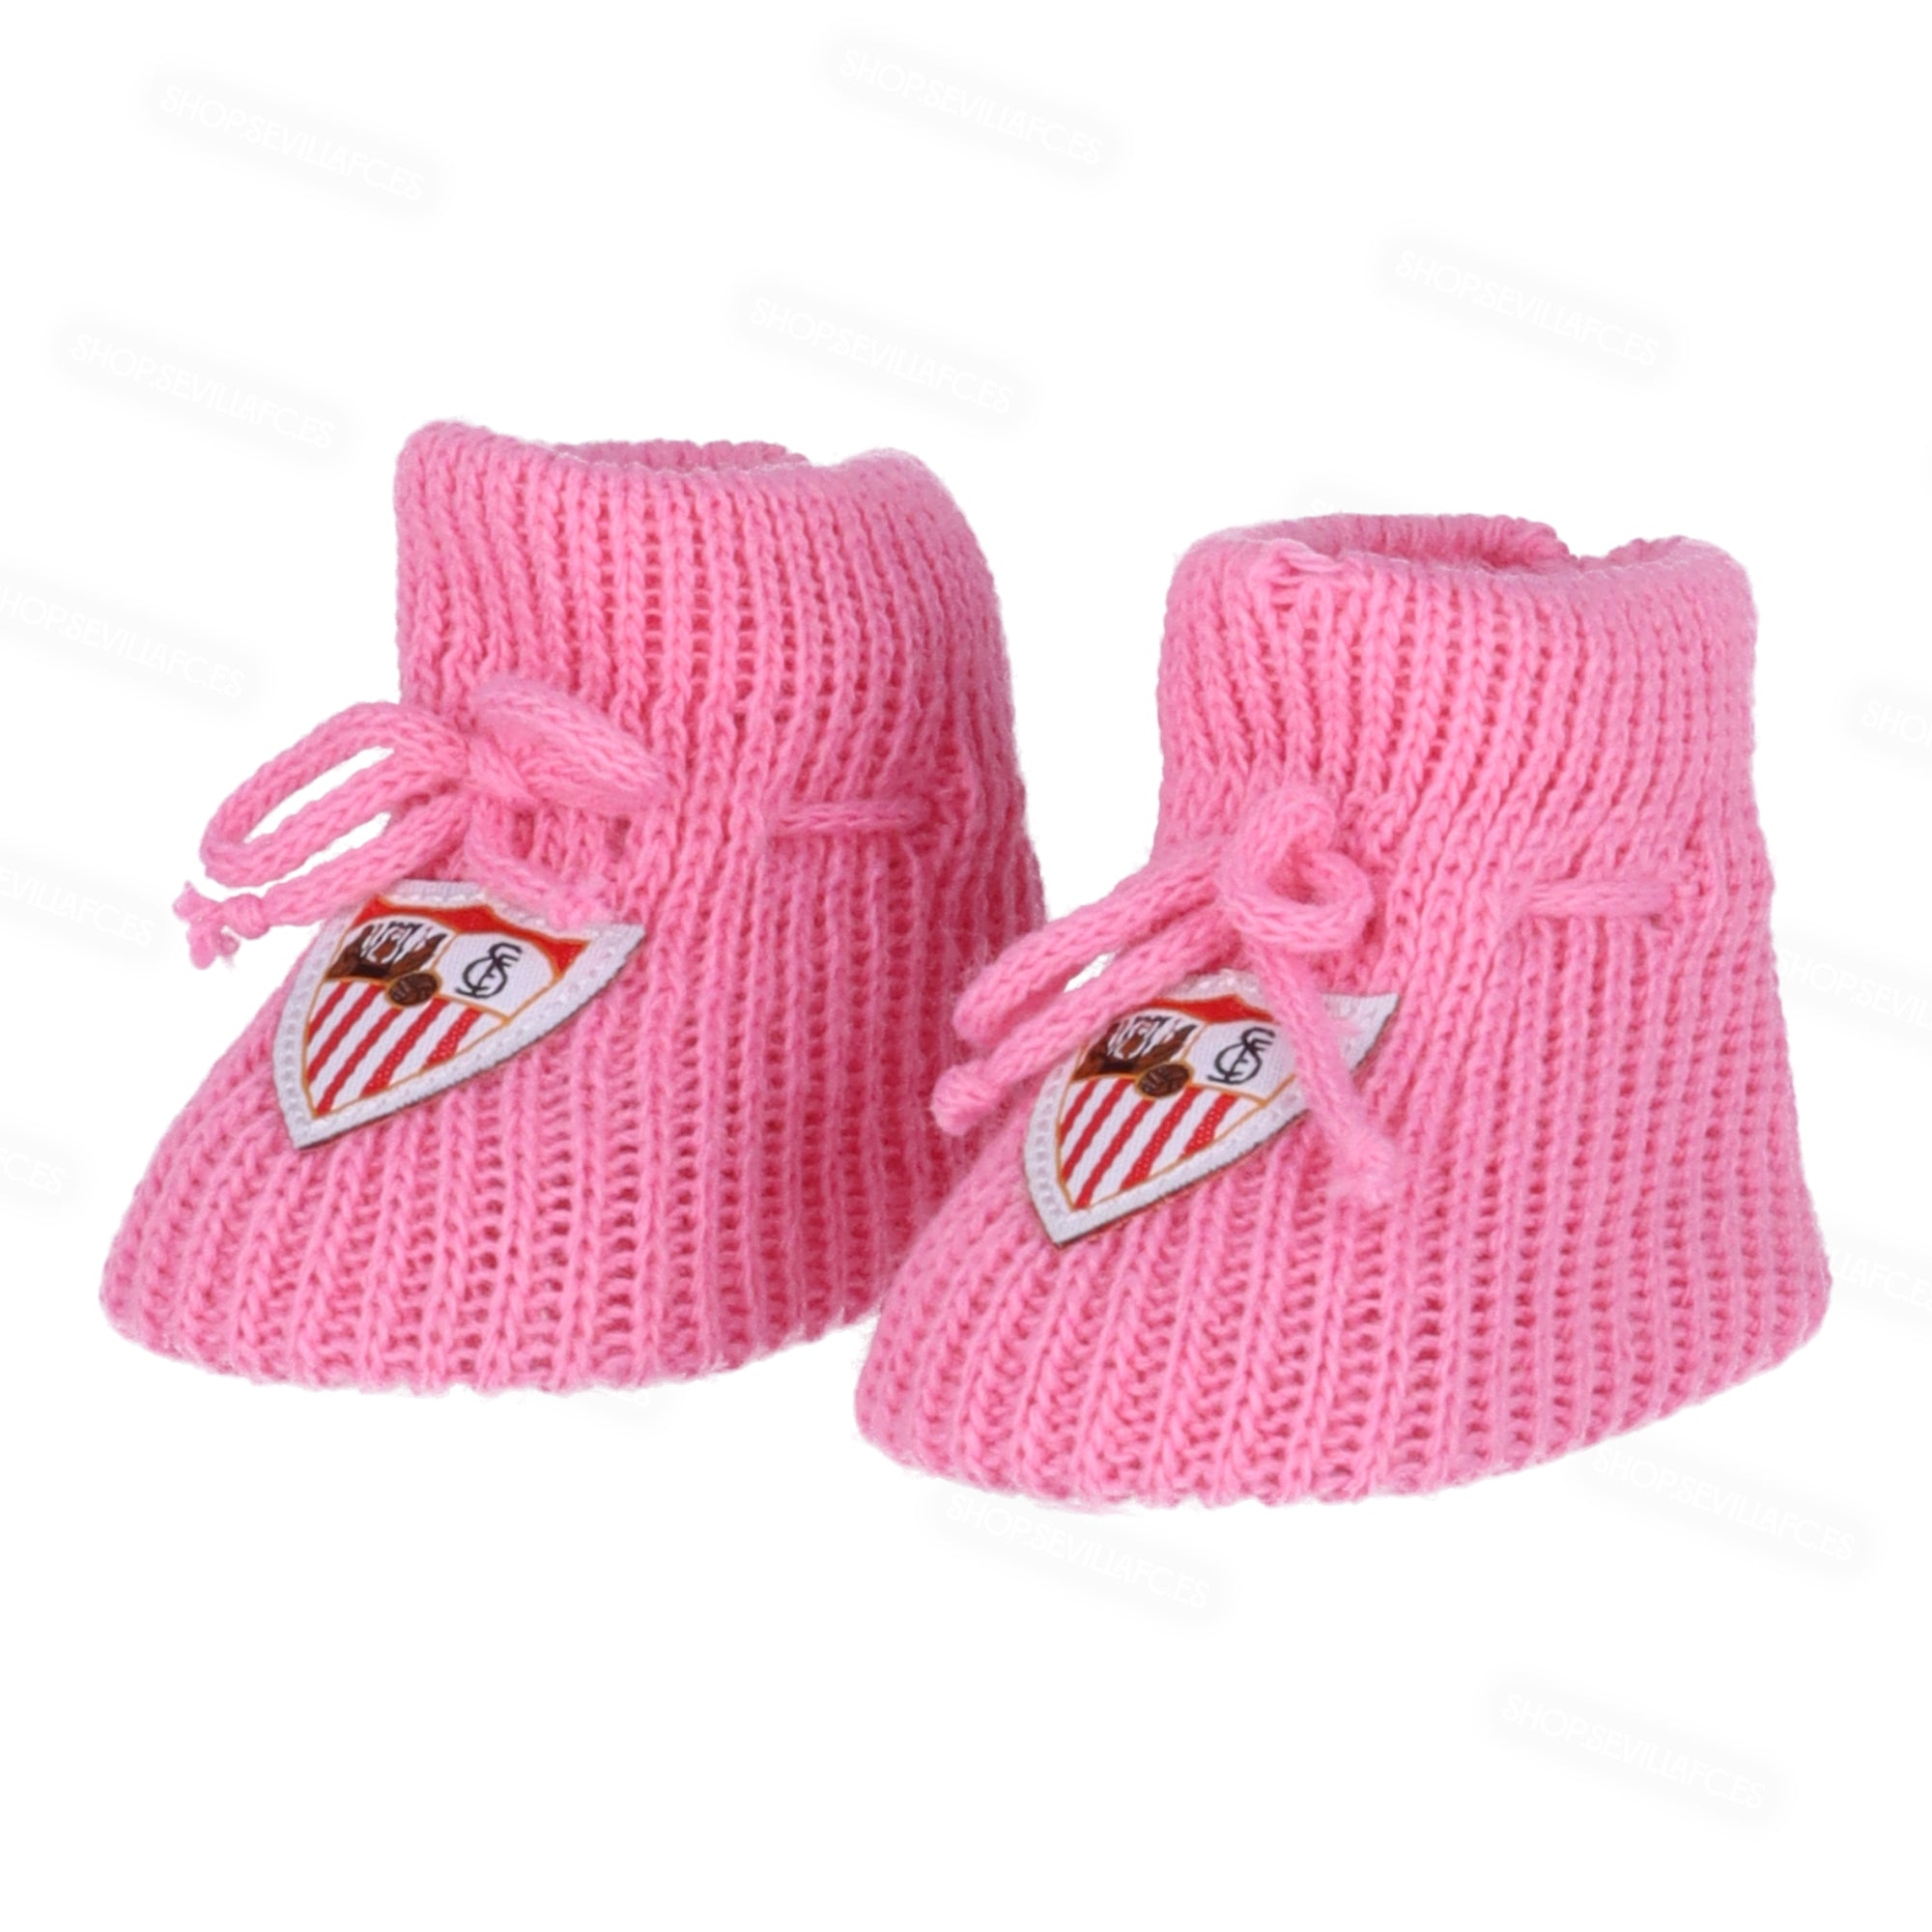 Pink baby booties